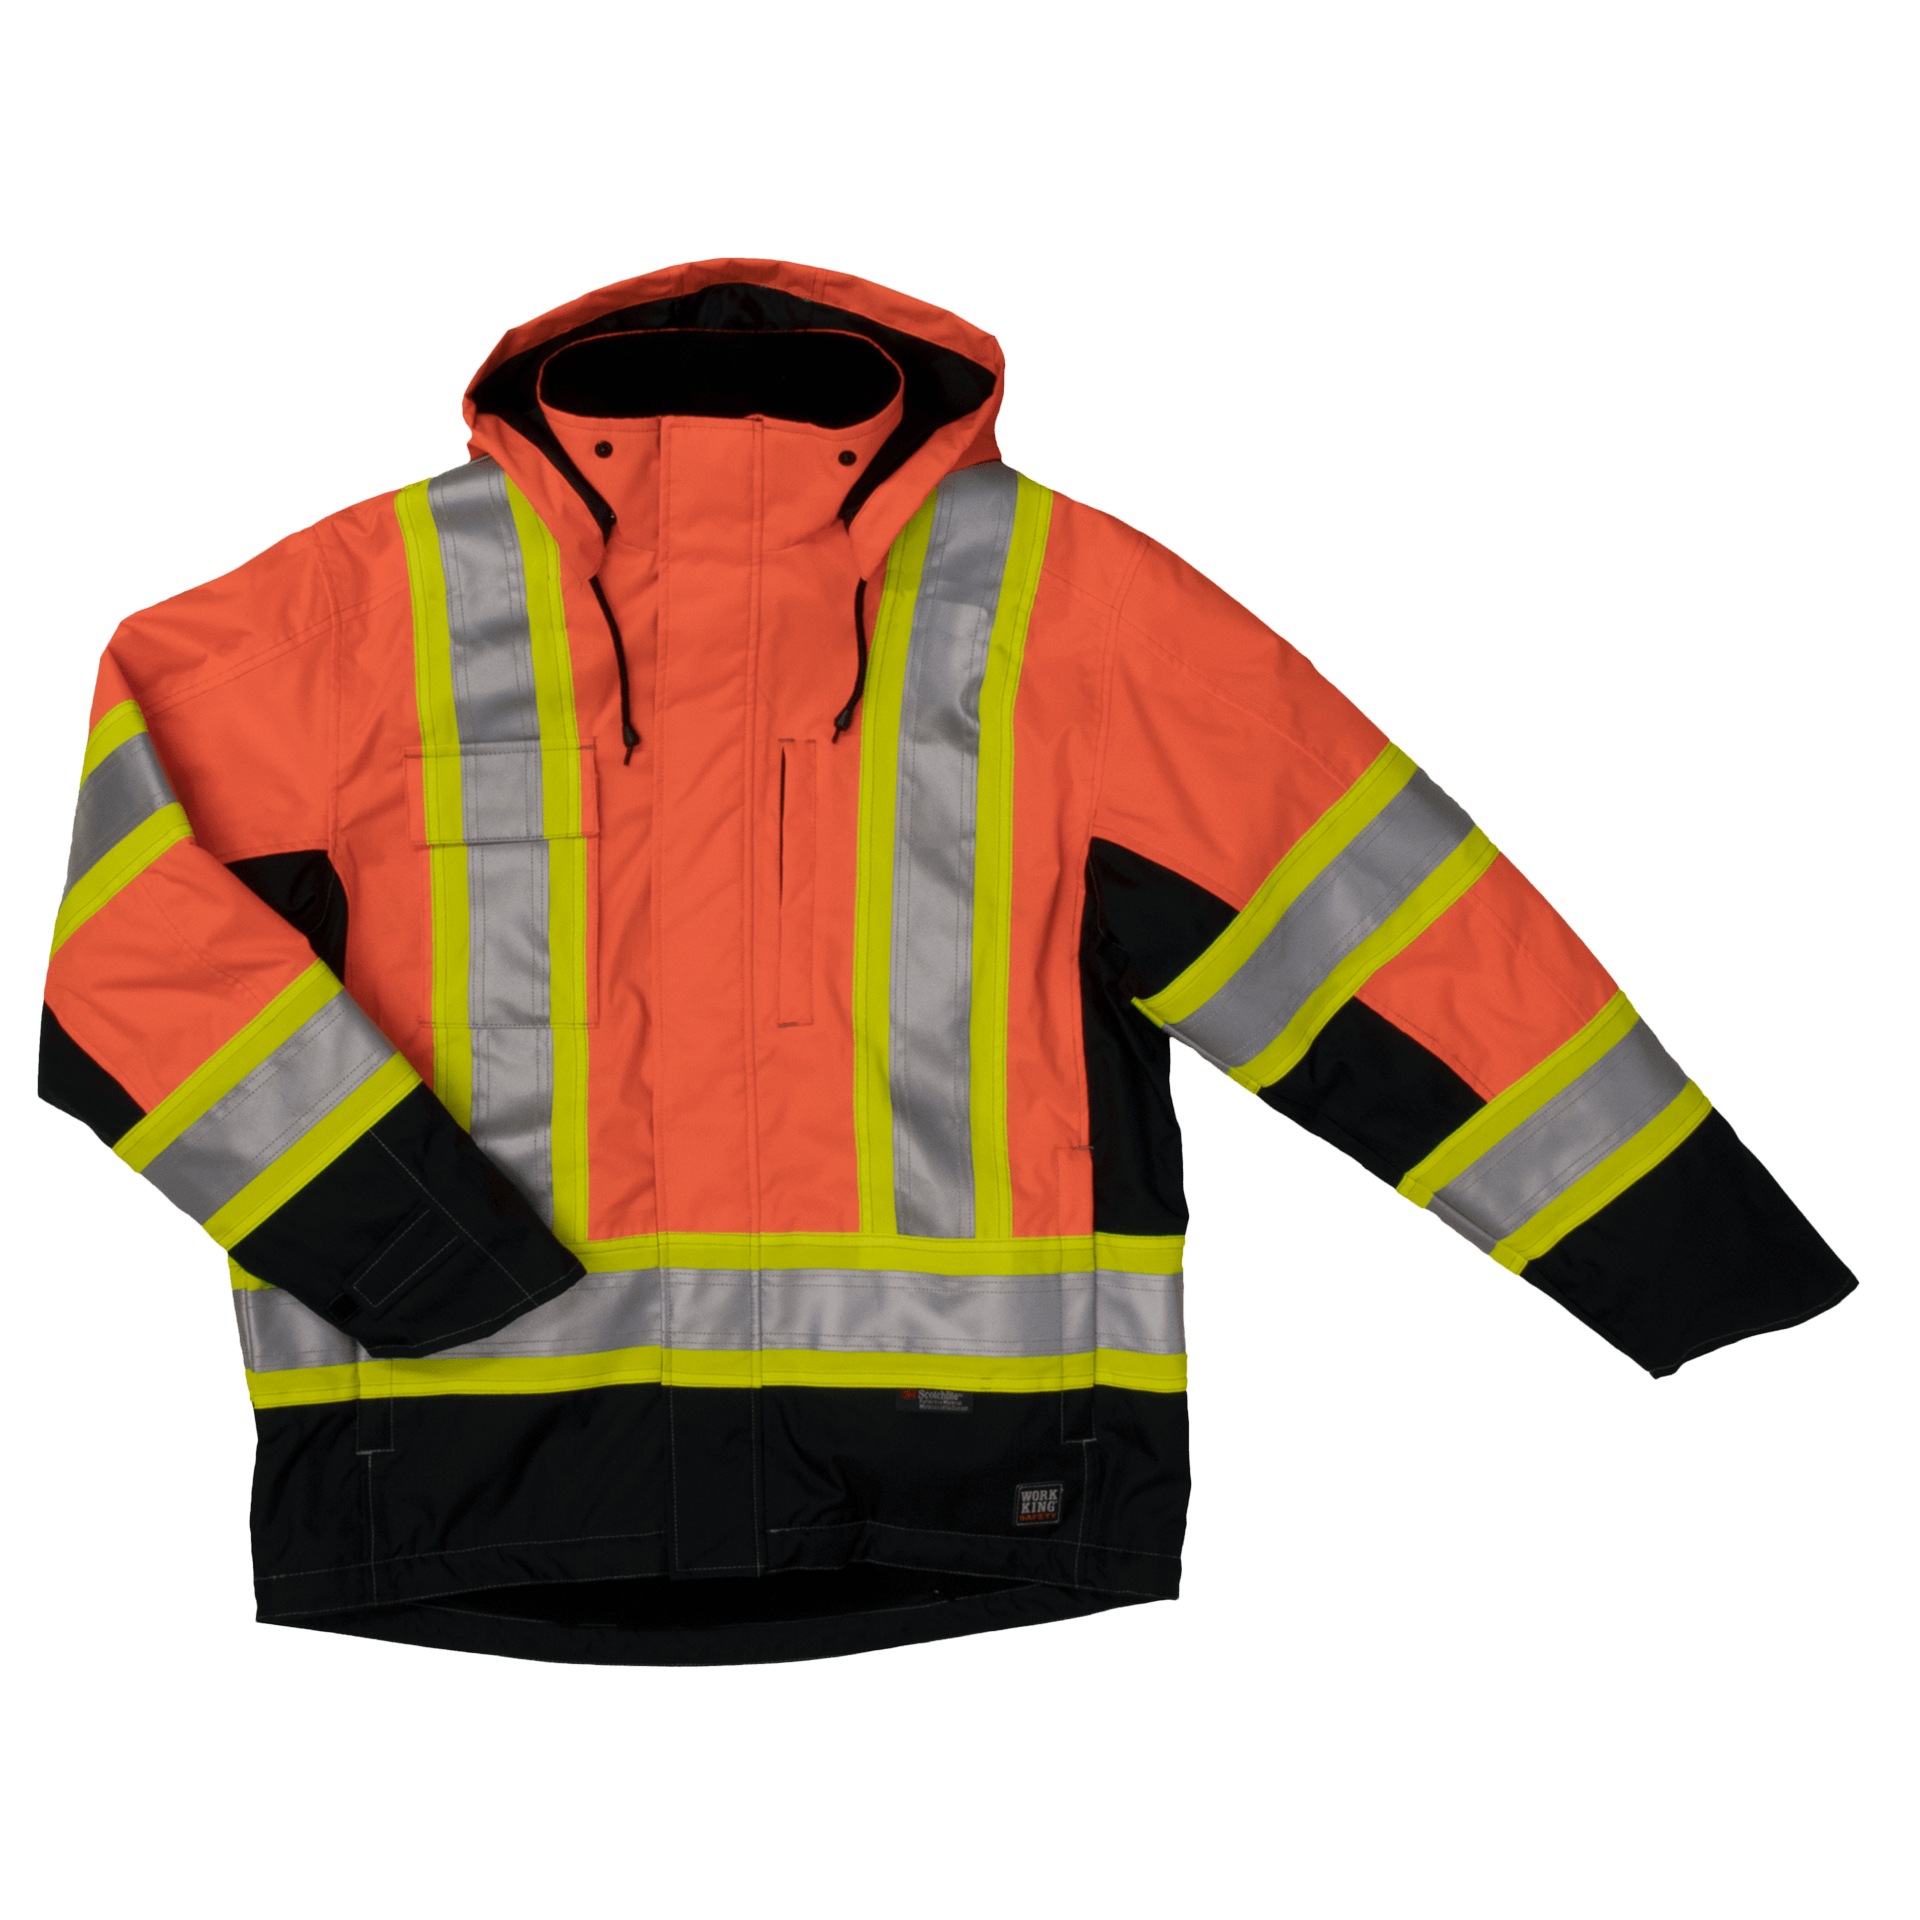 Tough Duck Fleece Lined Safety Jacket - S245 - Fluorescent Orange